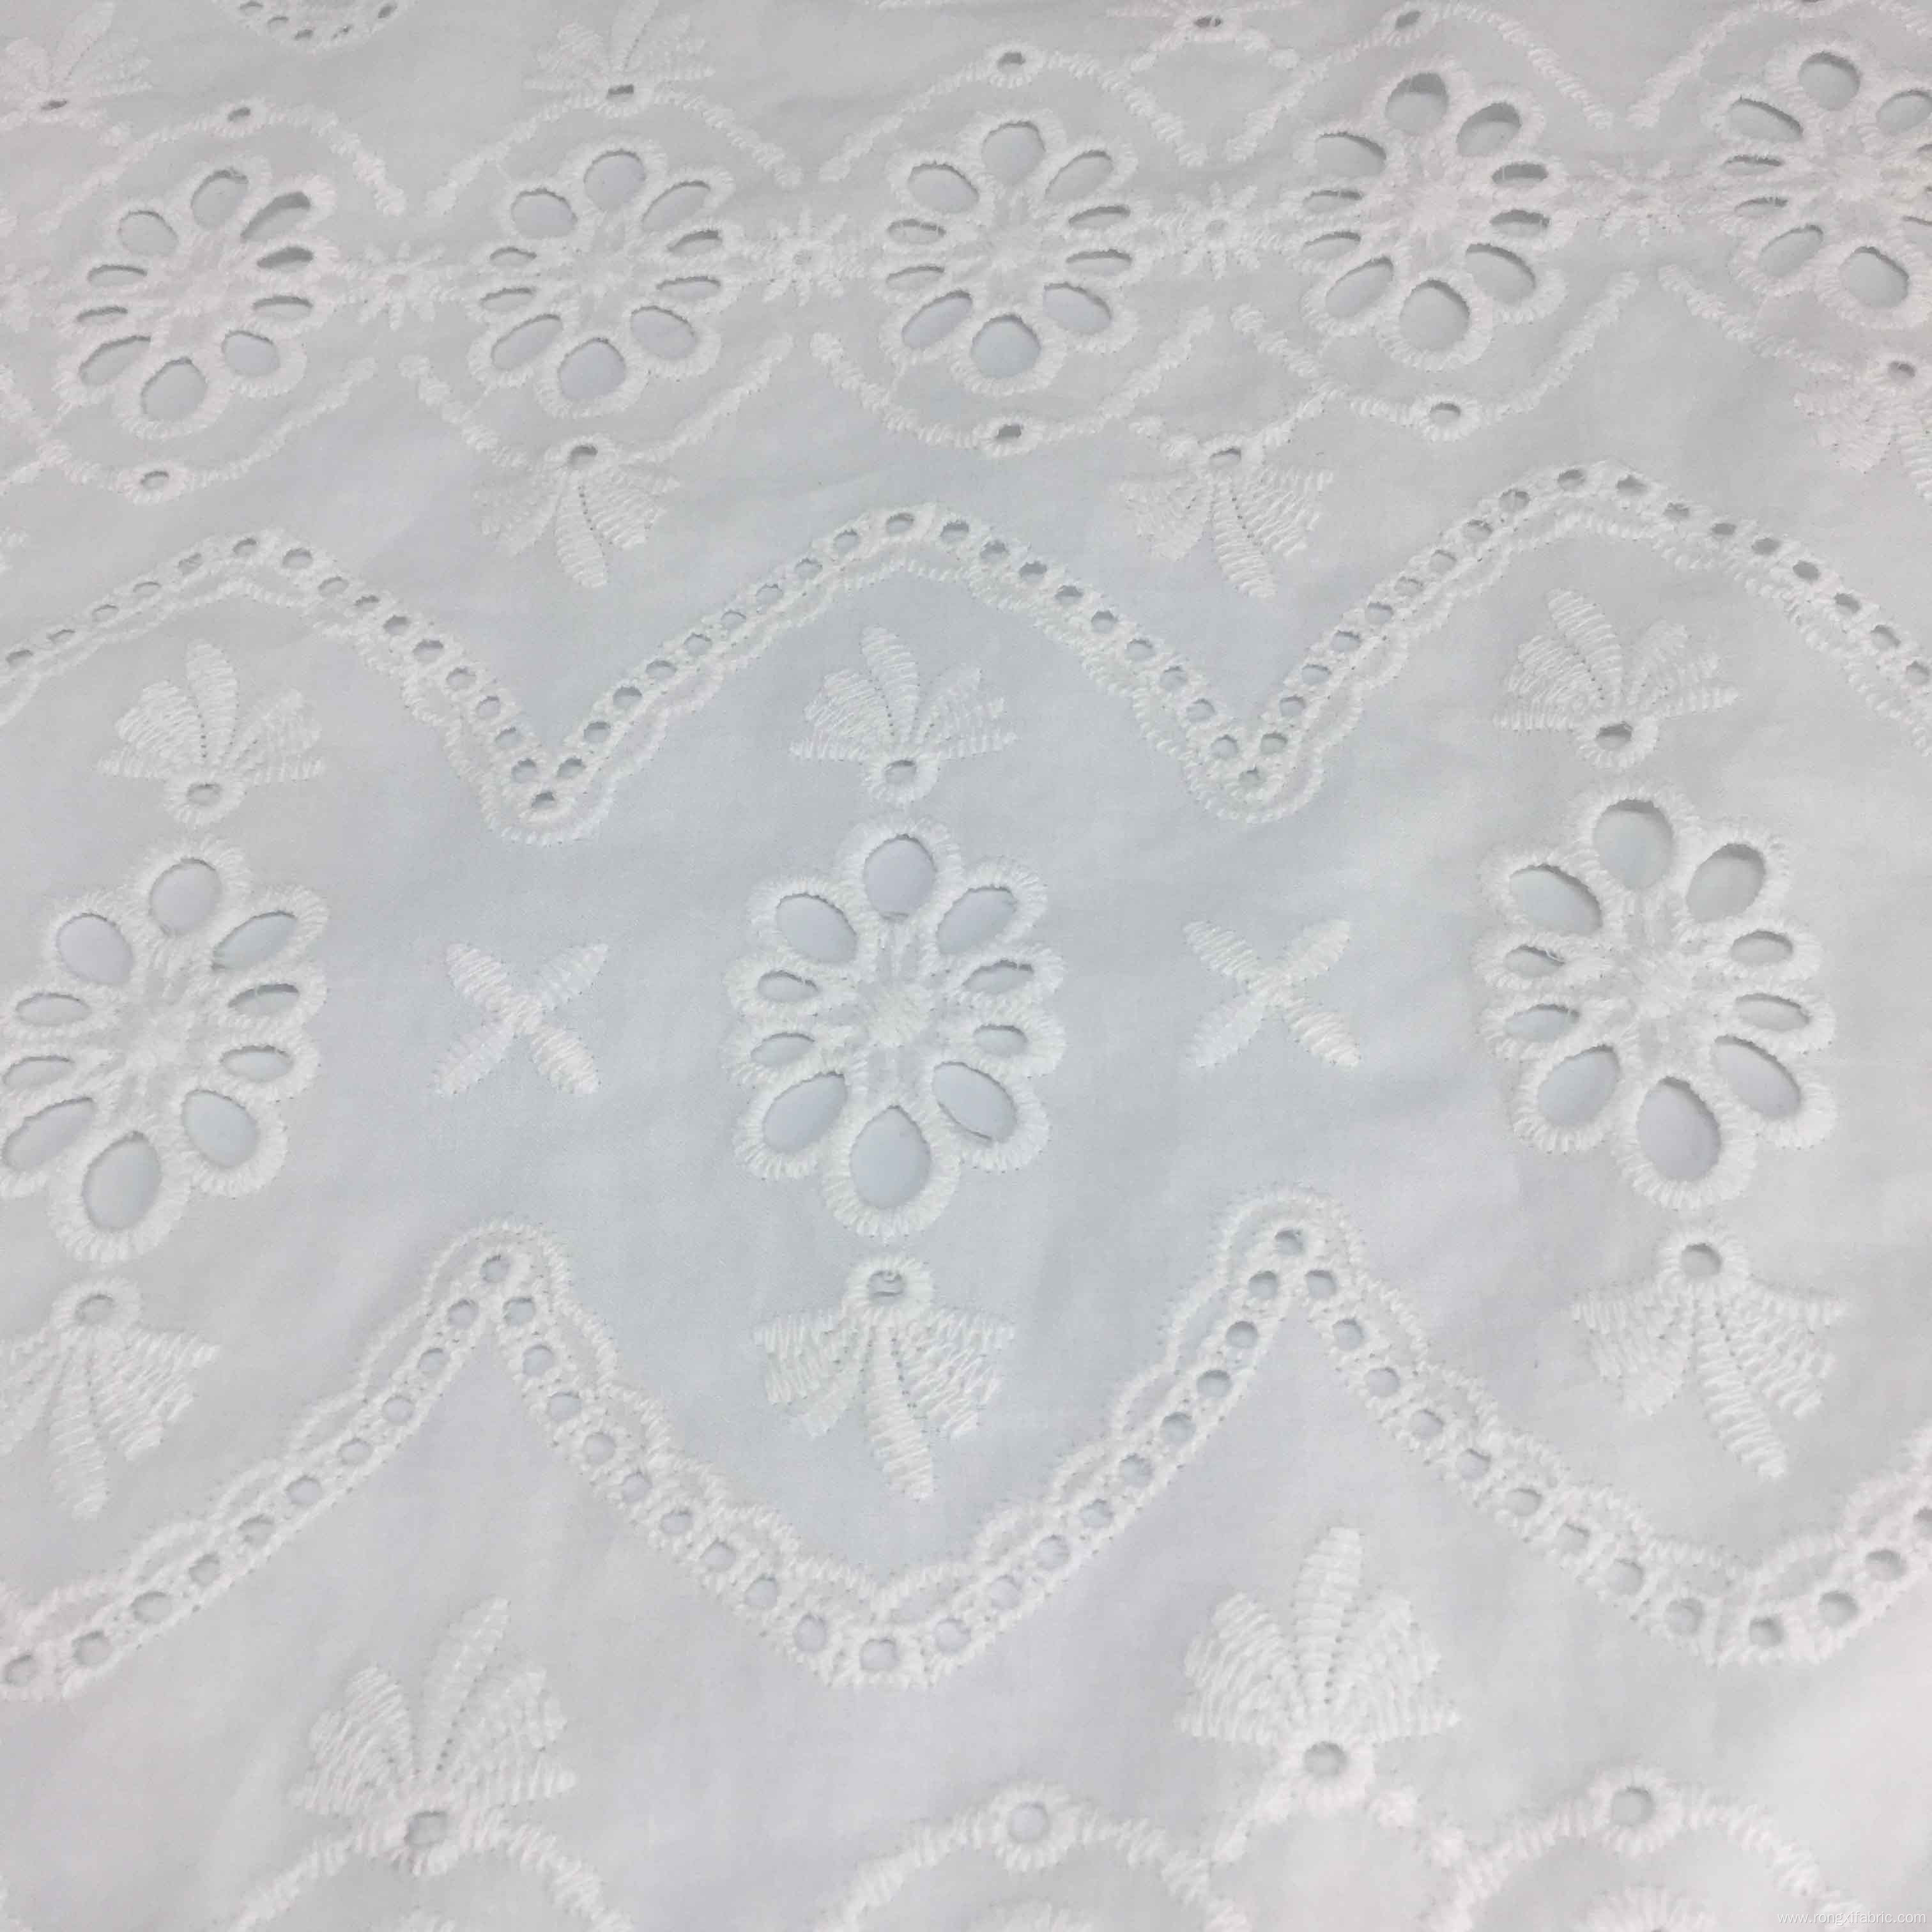 Jacquard Fabric Clothing Fabric Fabric Textile 100% Cotton